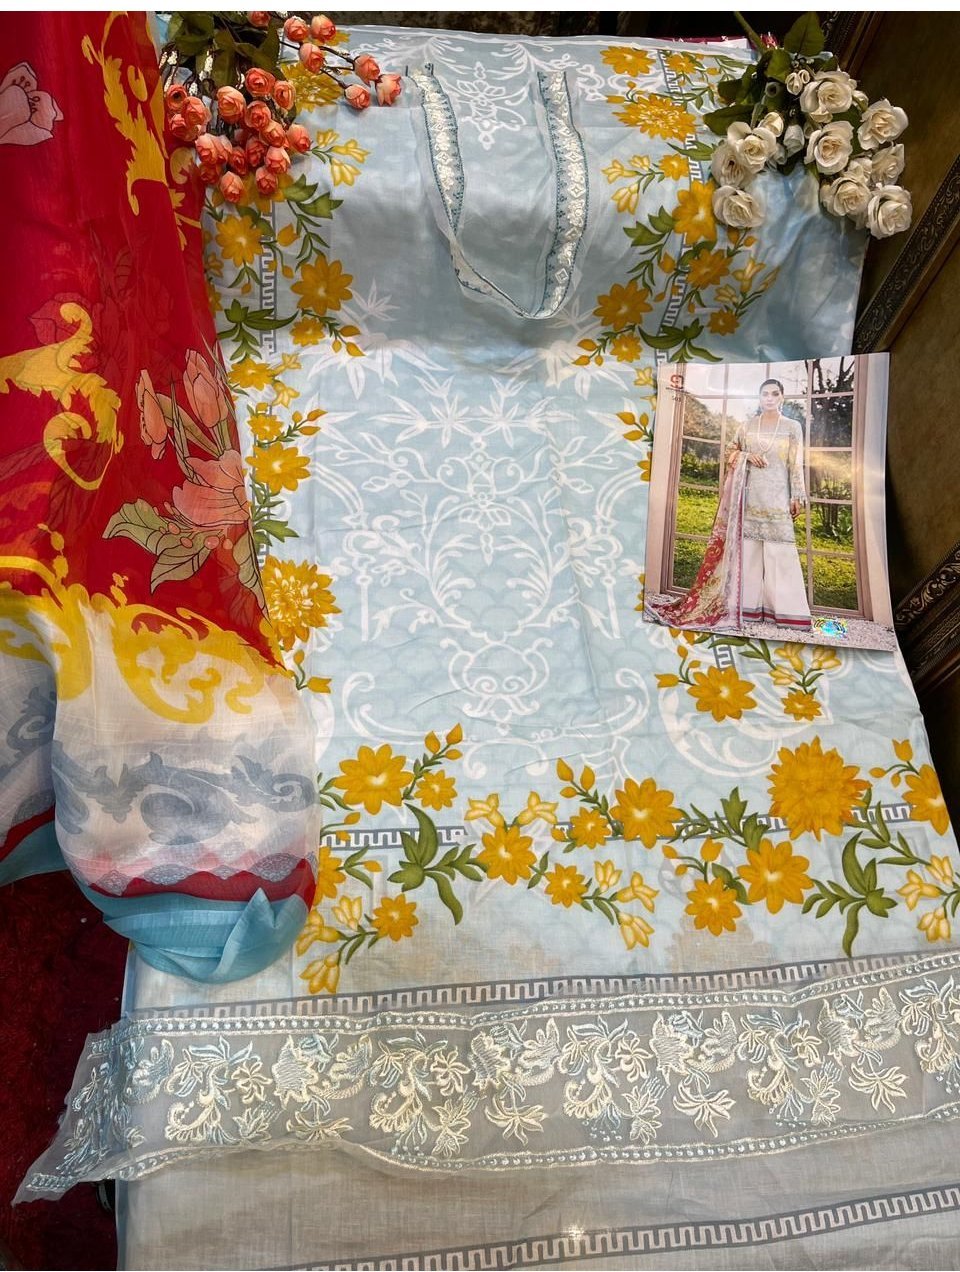 Printed Karachi Dress Materials with Dupatta For Women - Stilento